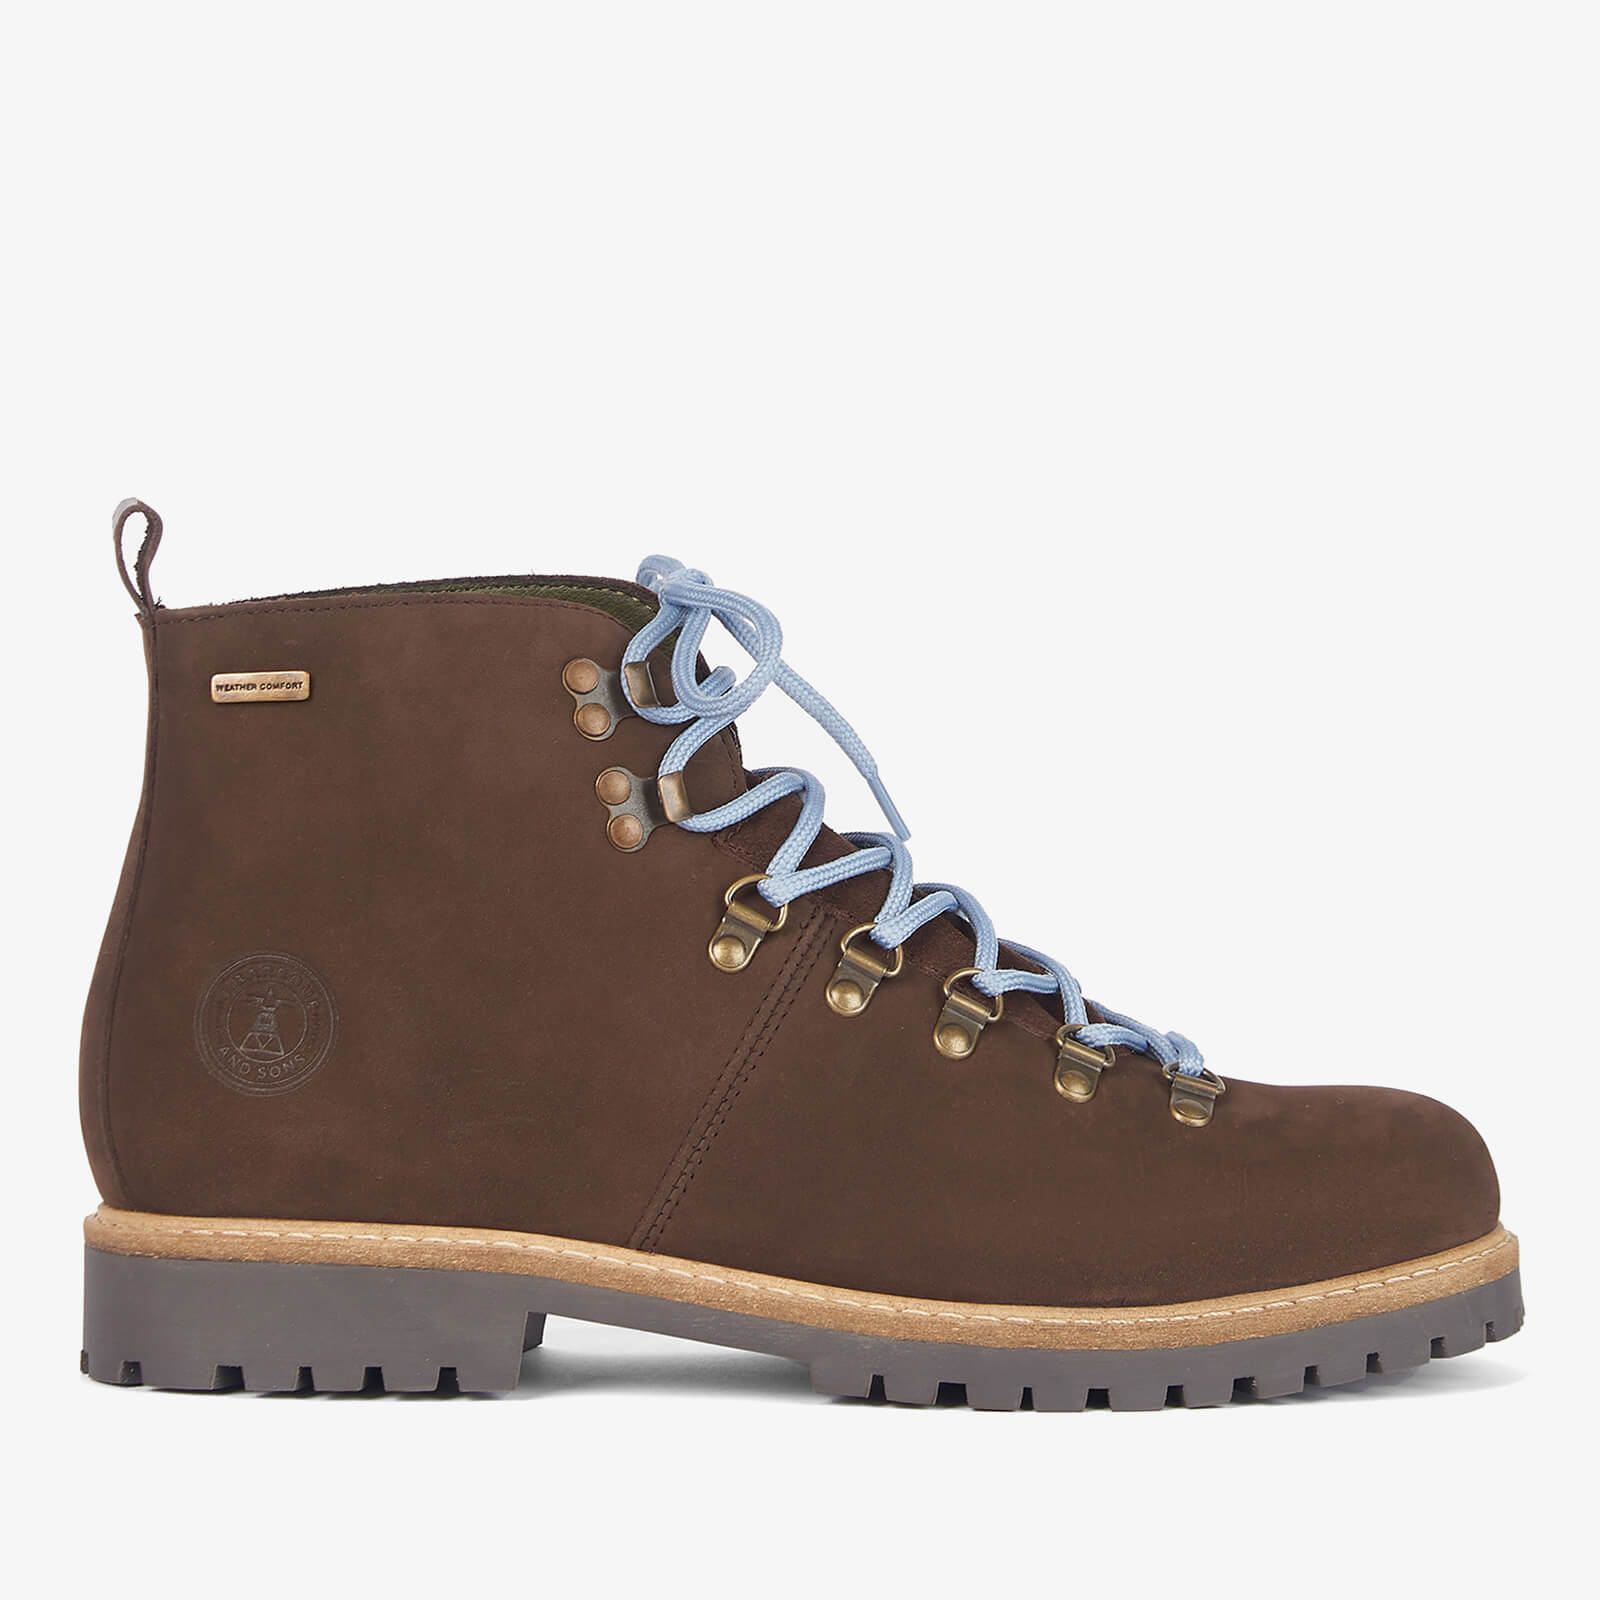 Barbour Men’s Wainwright Nubuck Hiking-Style Boots